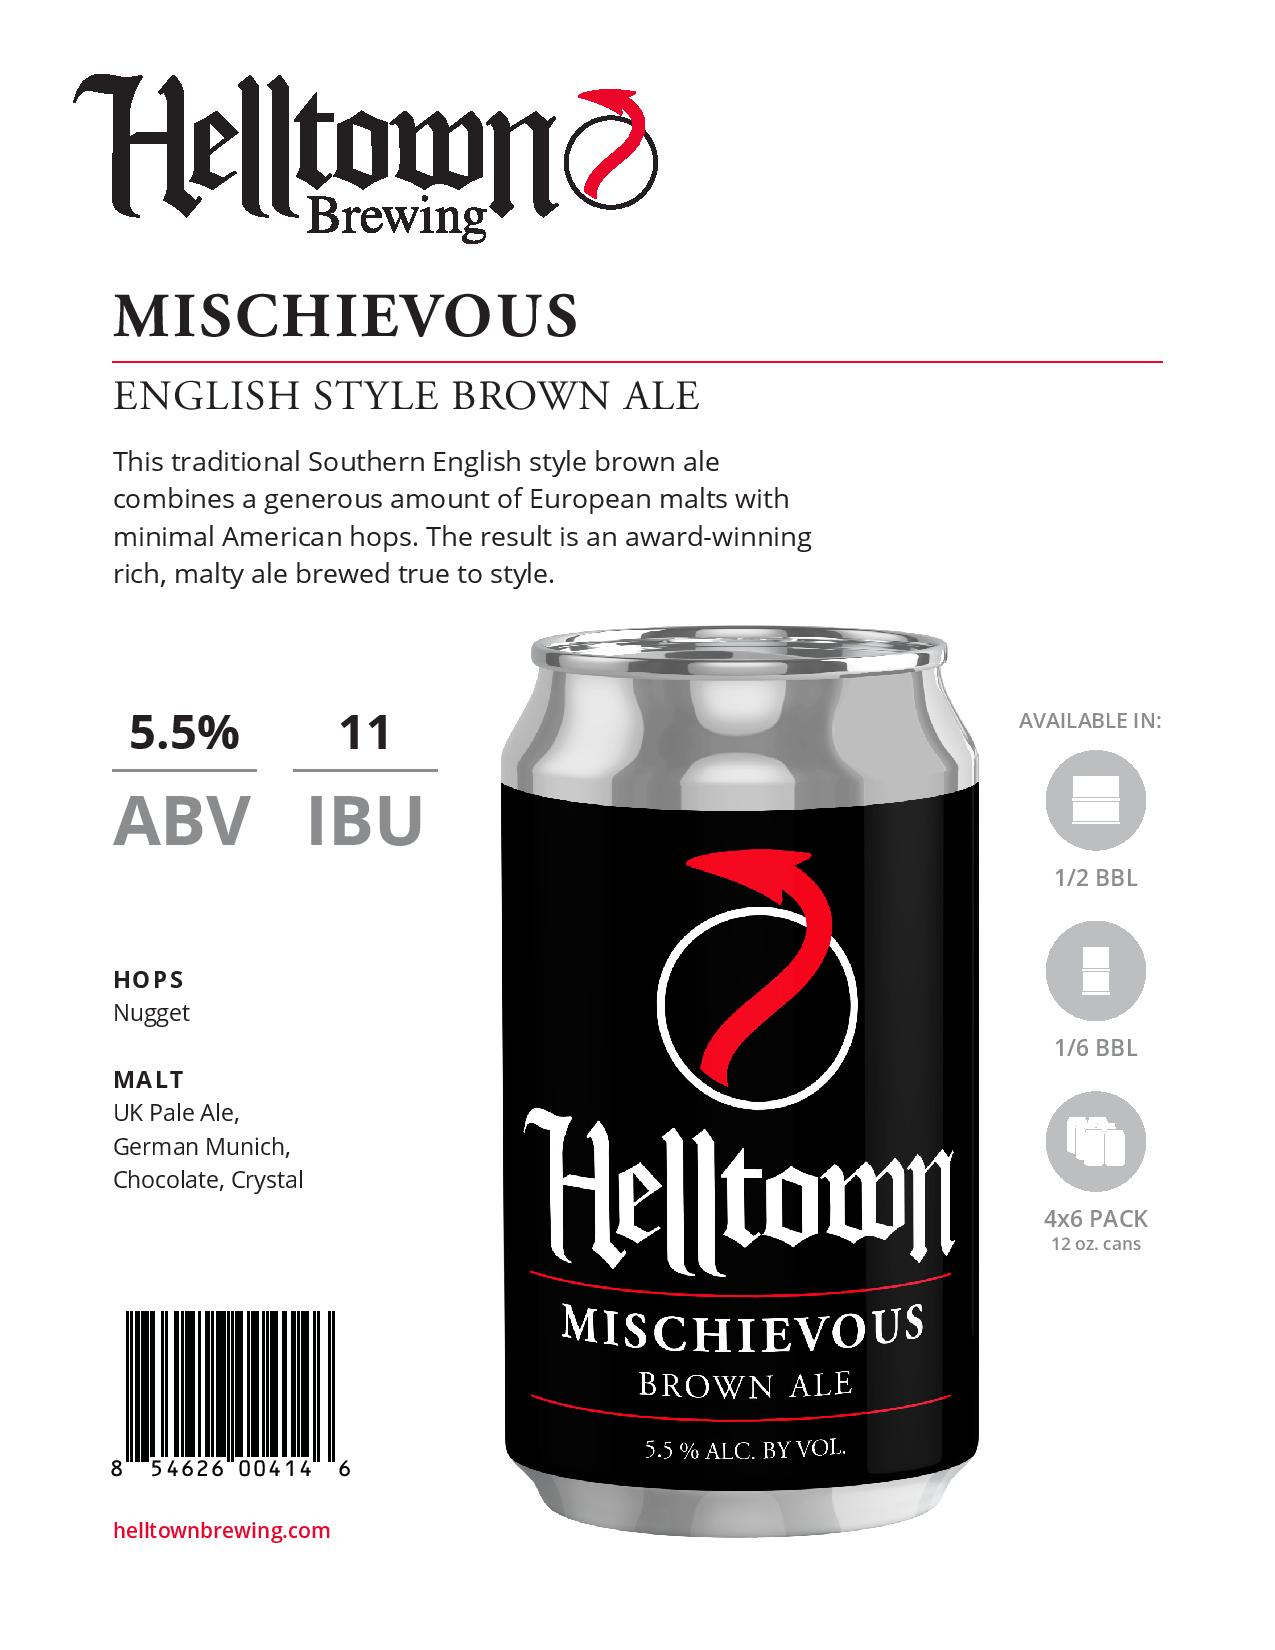 Mischievous Brown Ale